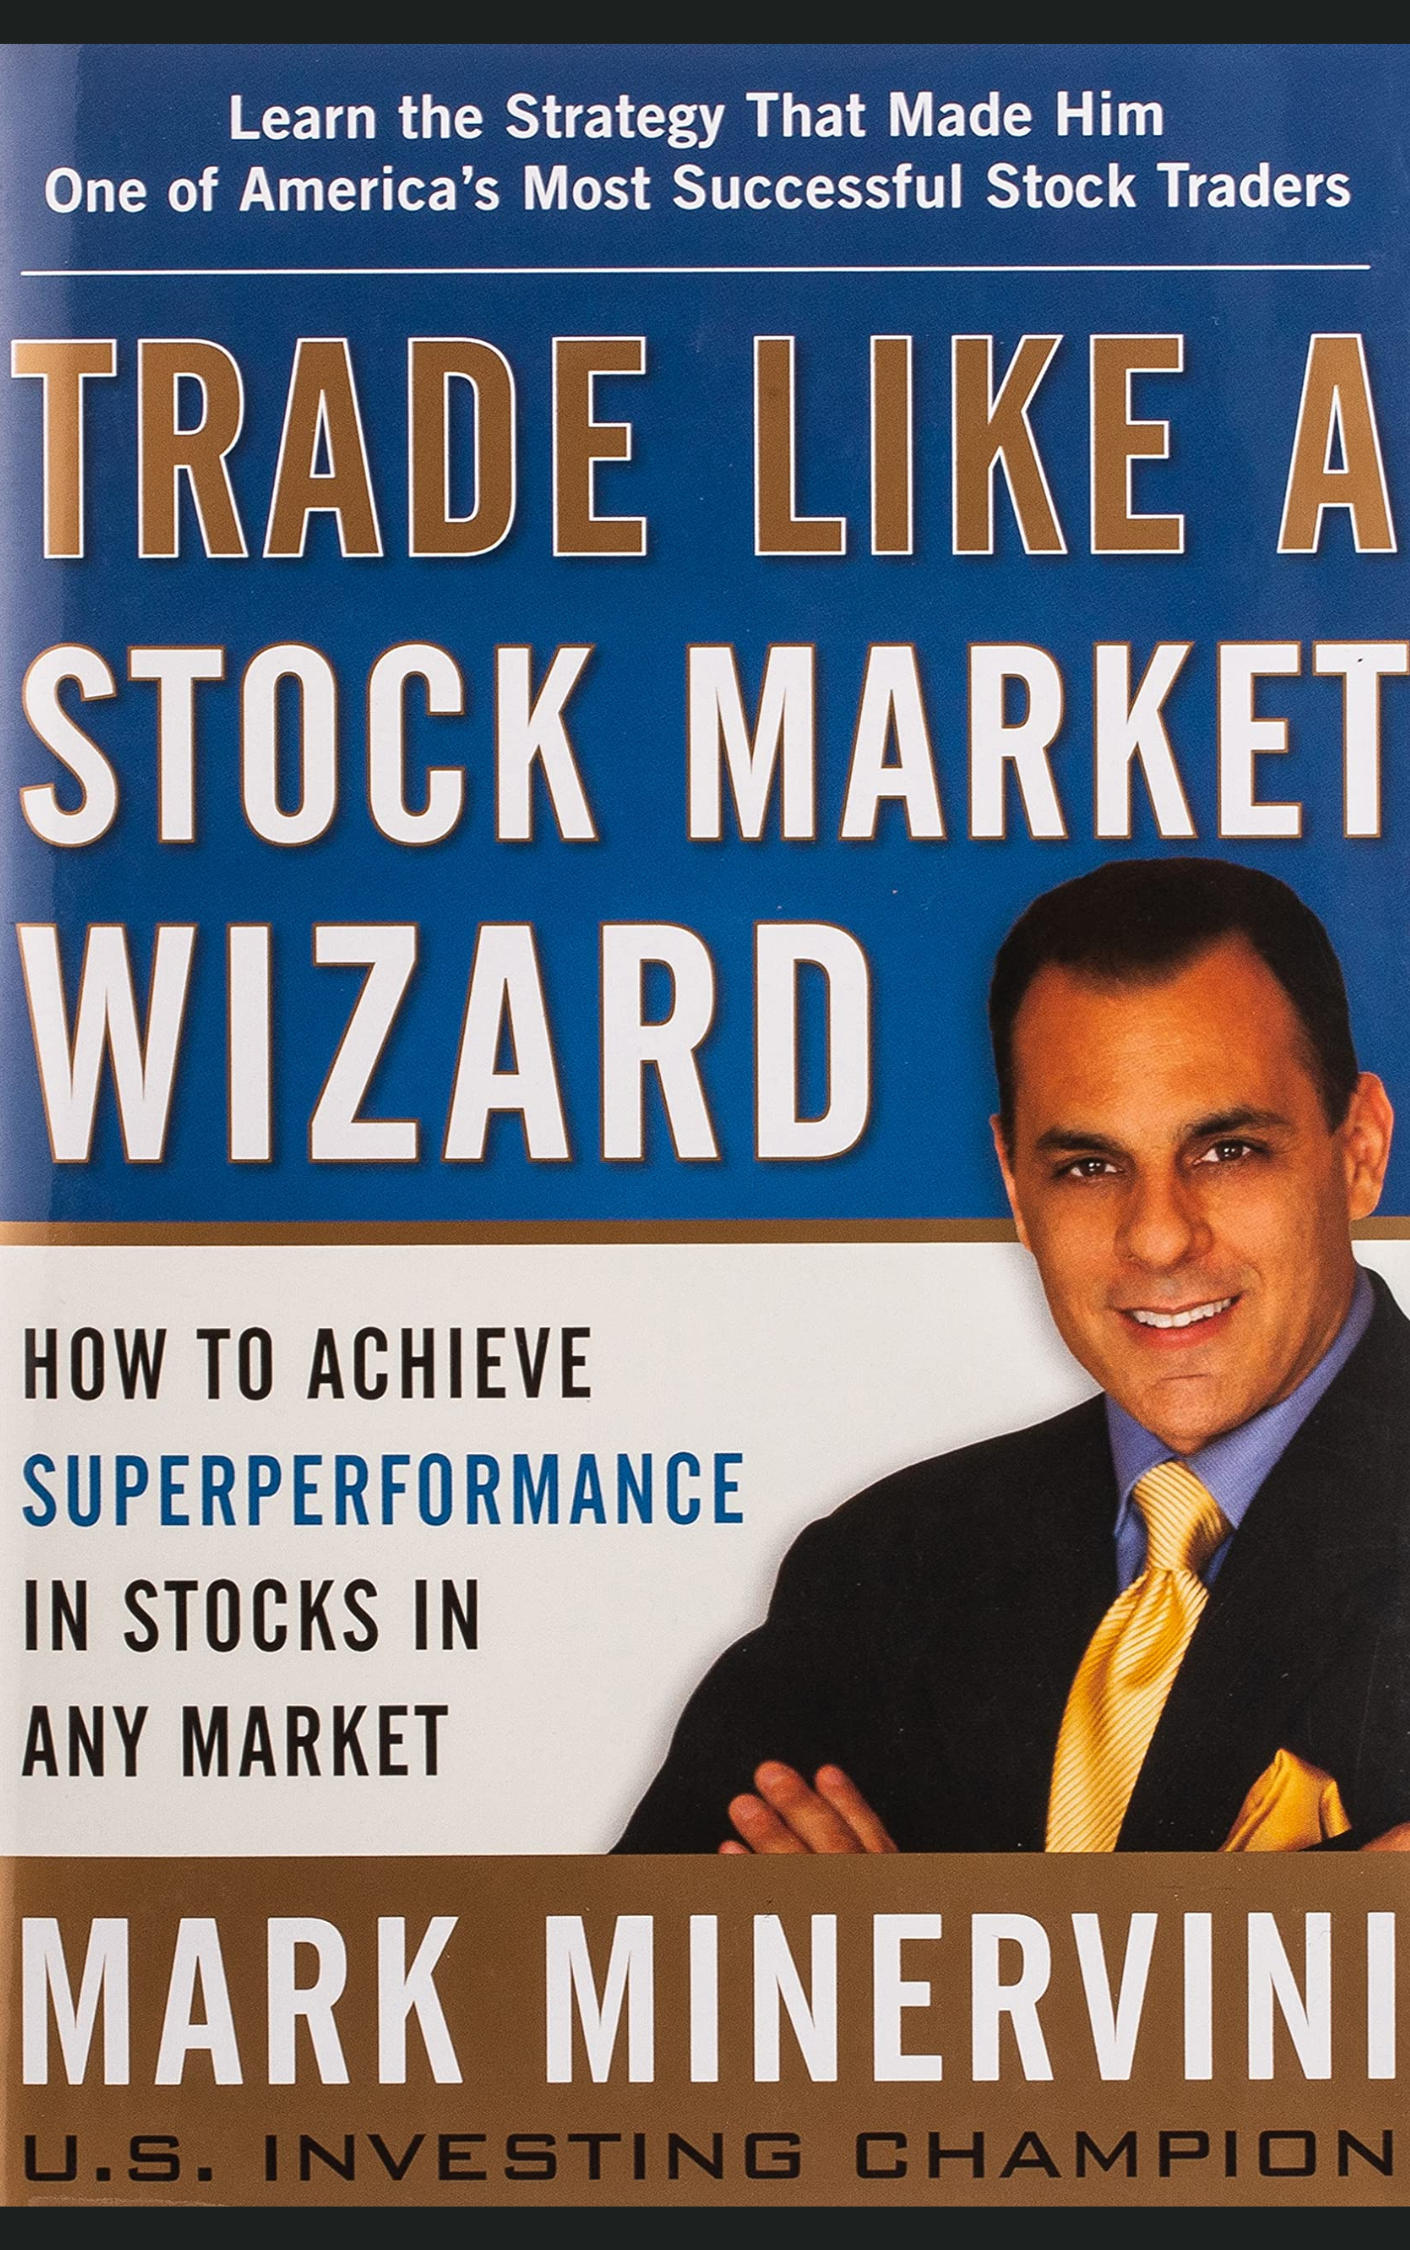 TRADE LIKE A STOCK MARKET WIZARD BY MARK MINERVINI